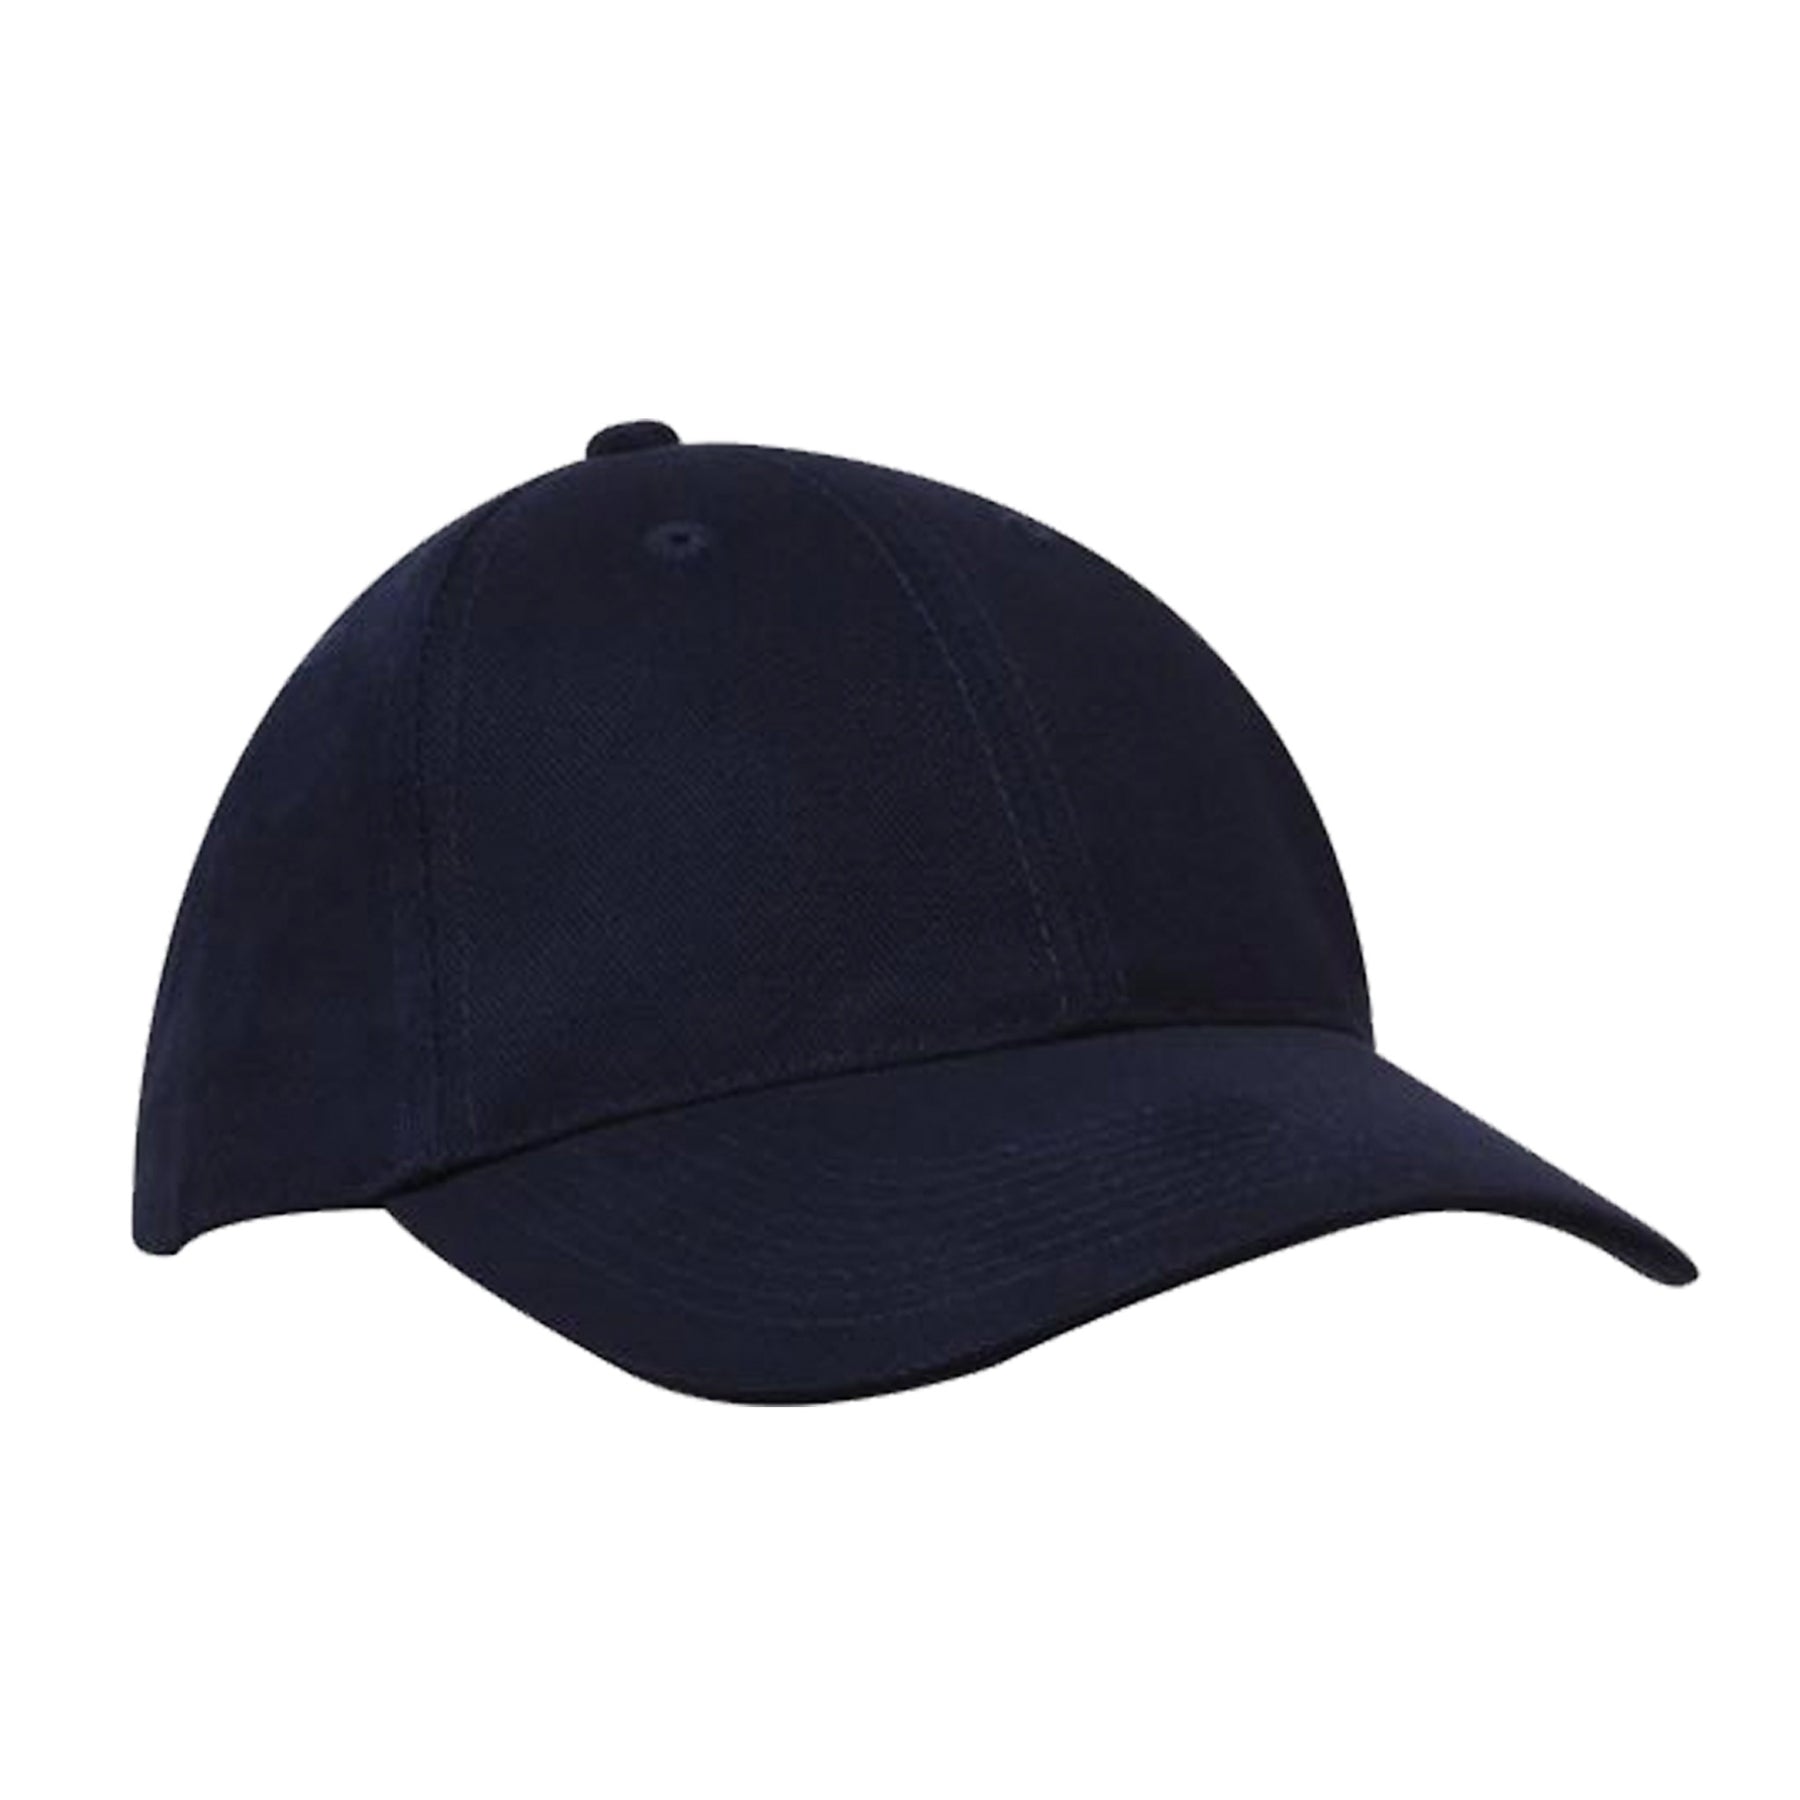 navy brushed cotton baseball cap